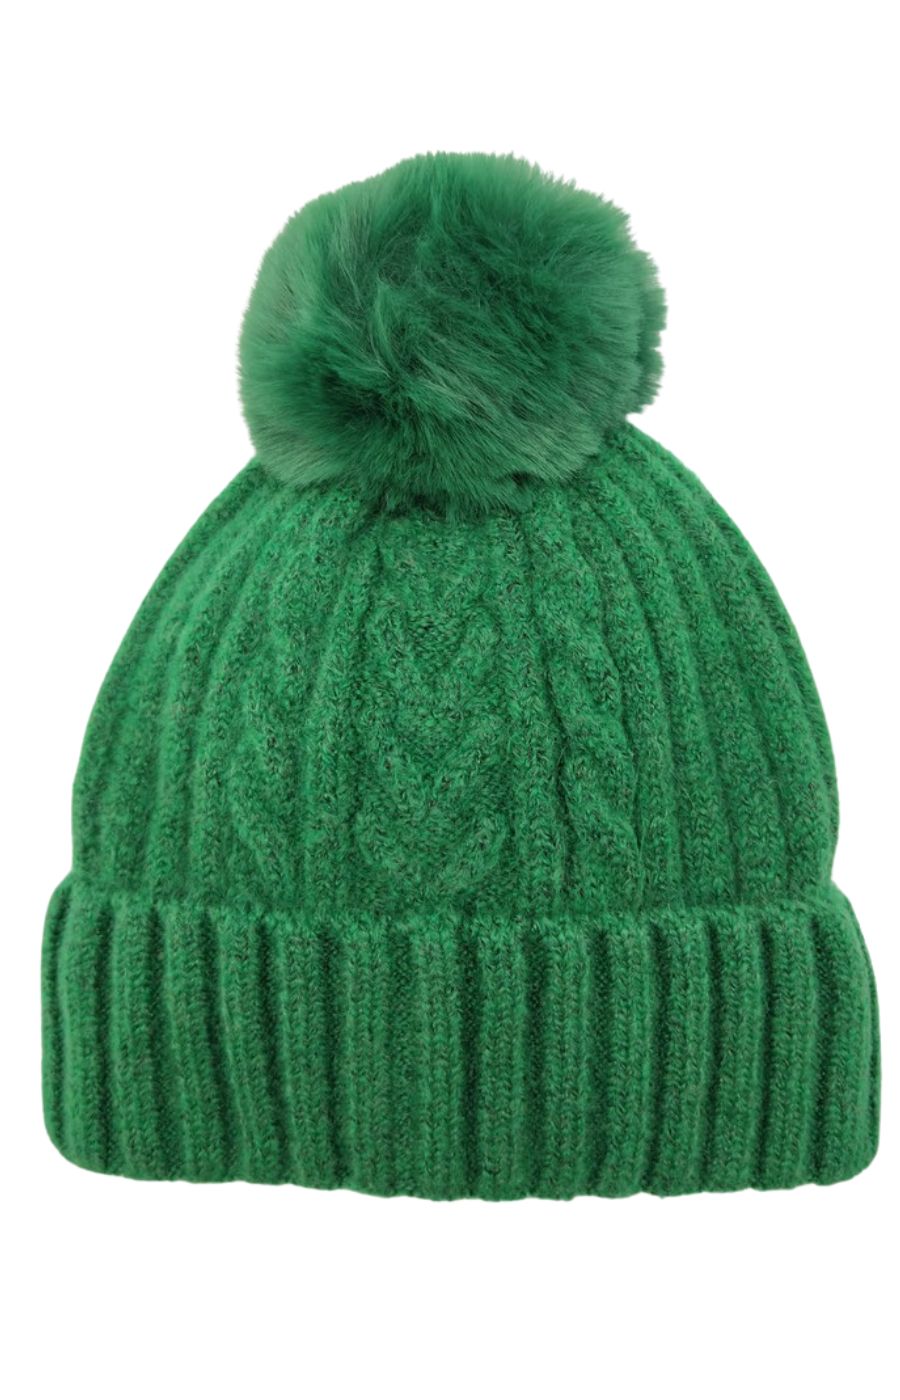 PomPom Hat in Green